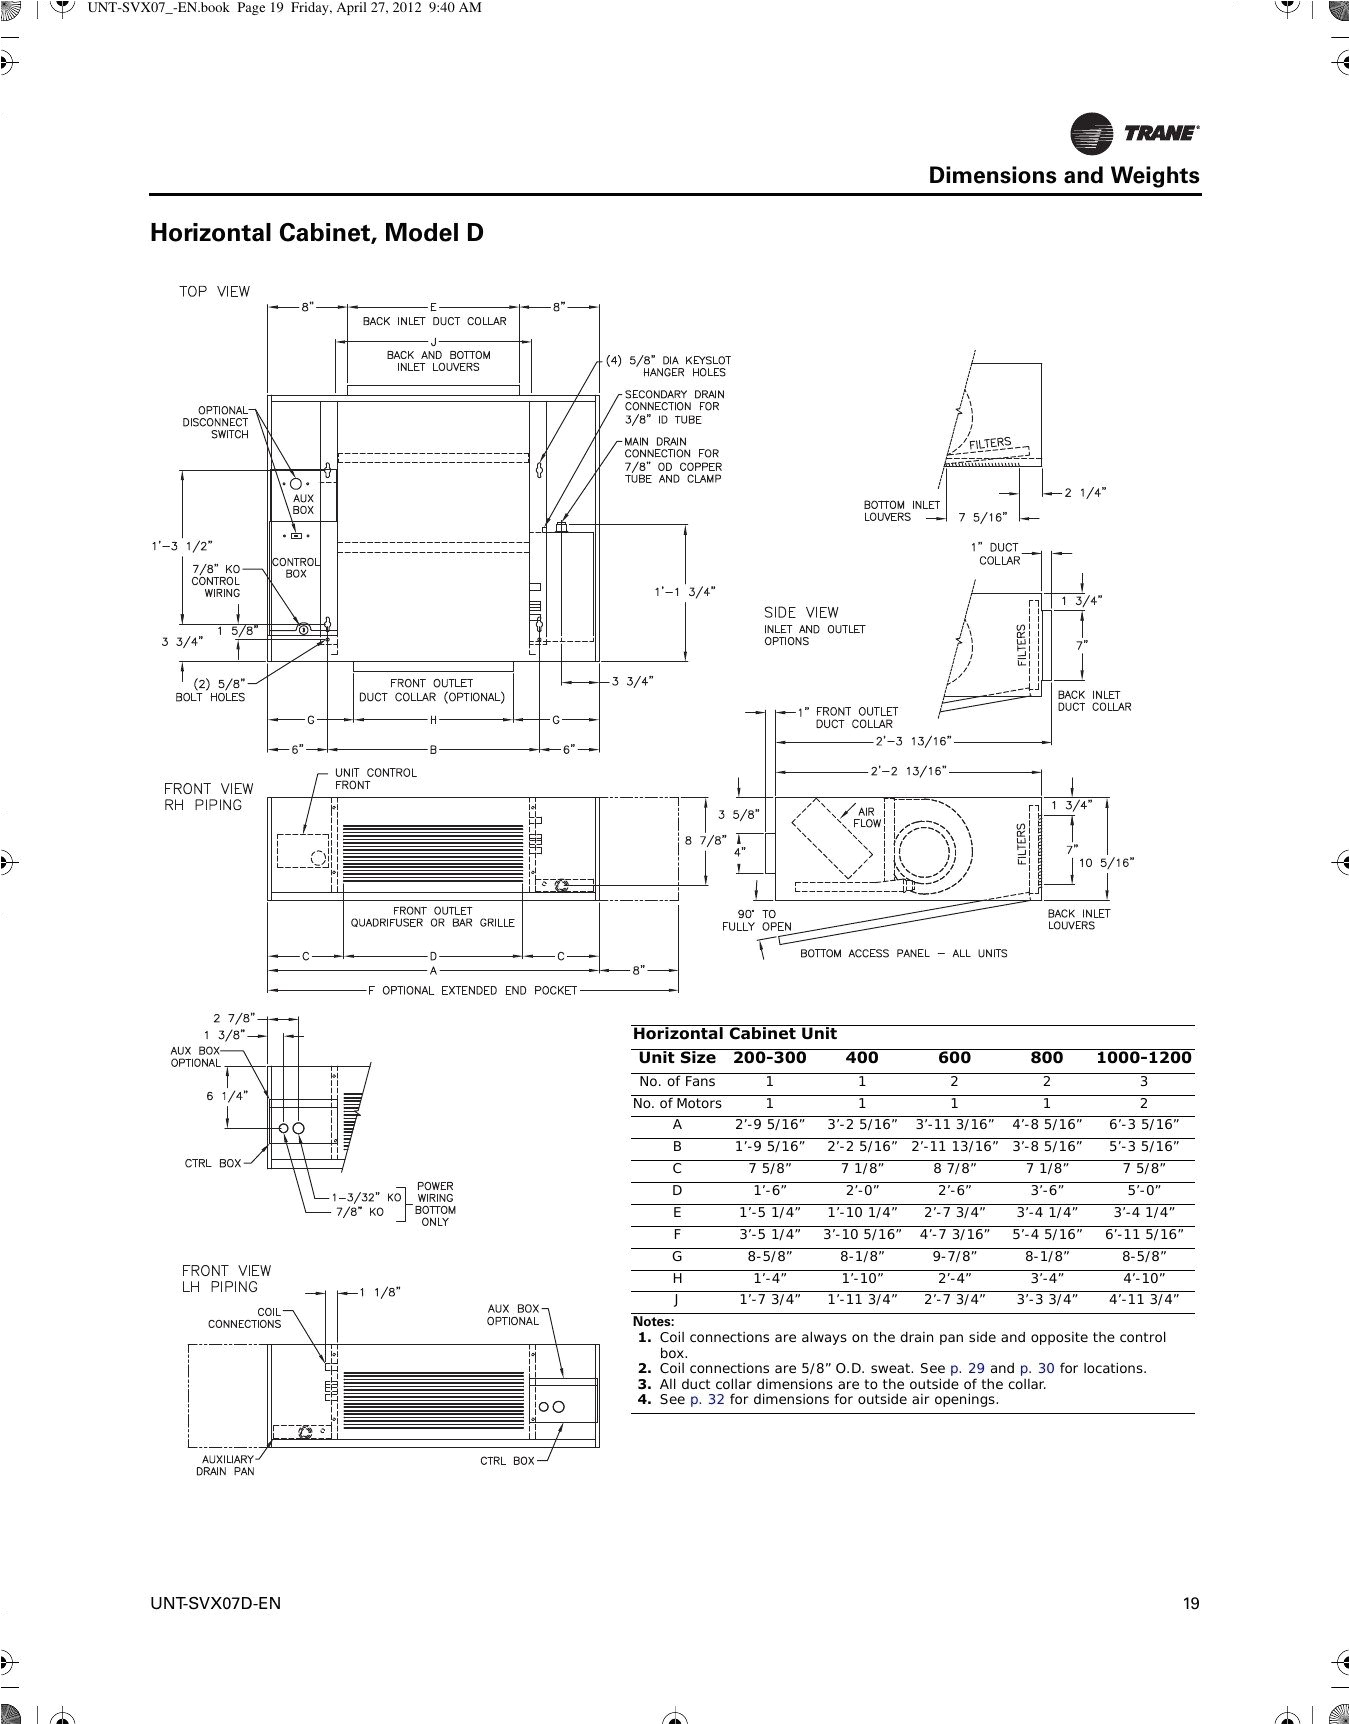 trane furnace wiring diagram trane electric furnace wiring diagram new inspirational trane wiring diagram heat pump 3b jpg